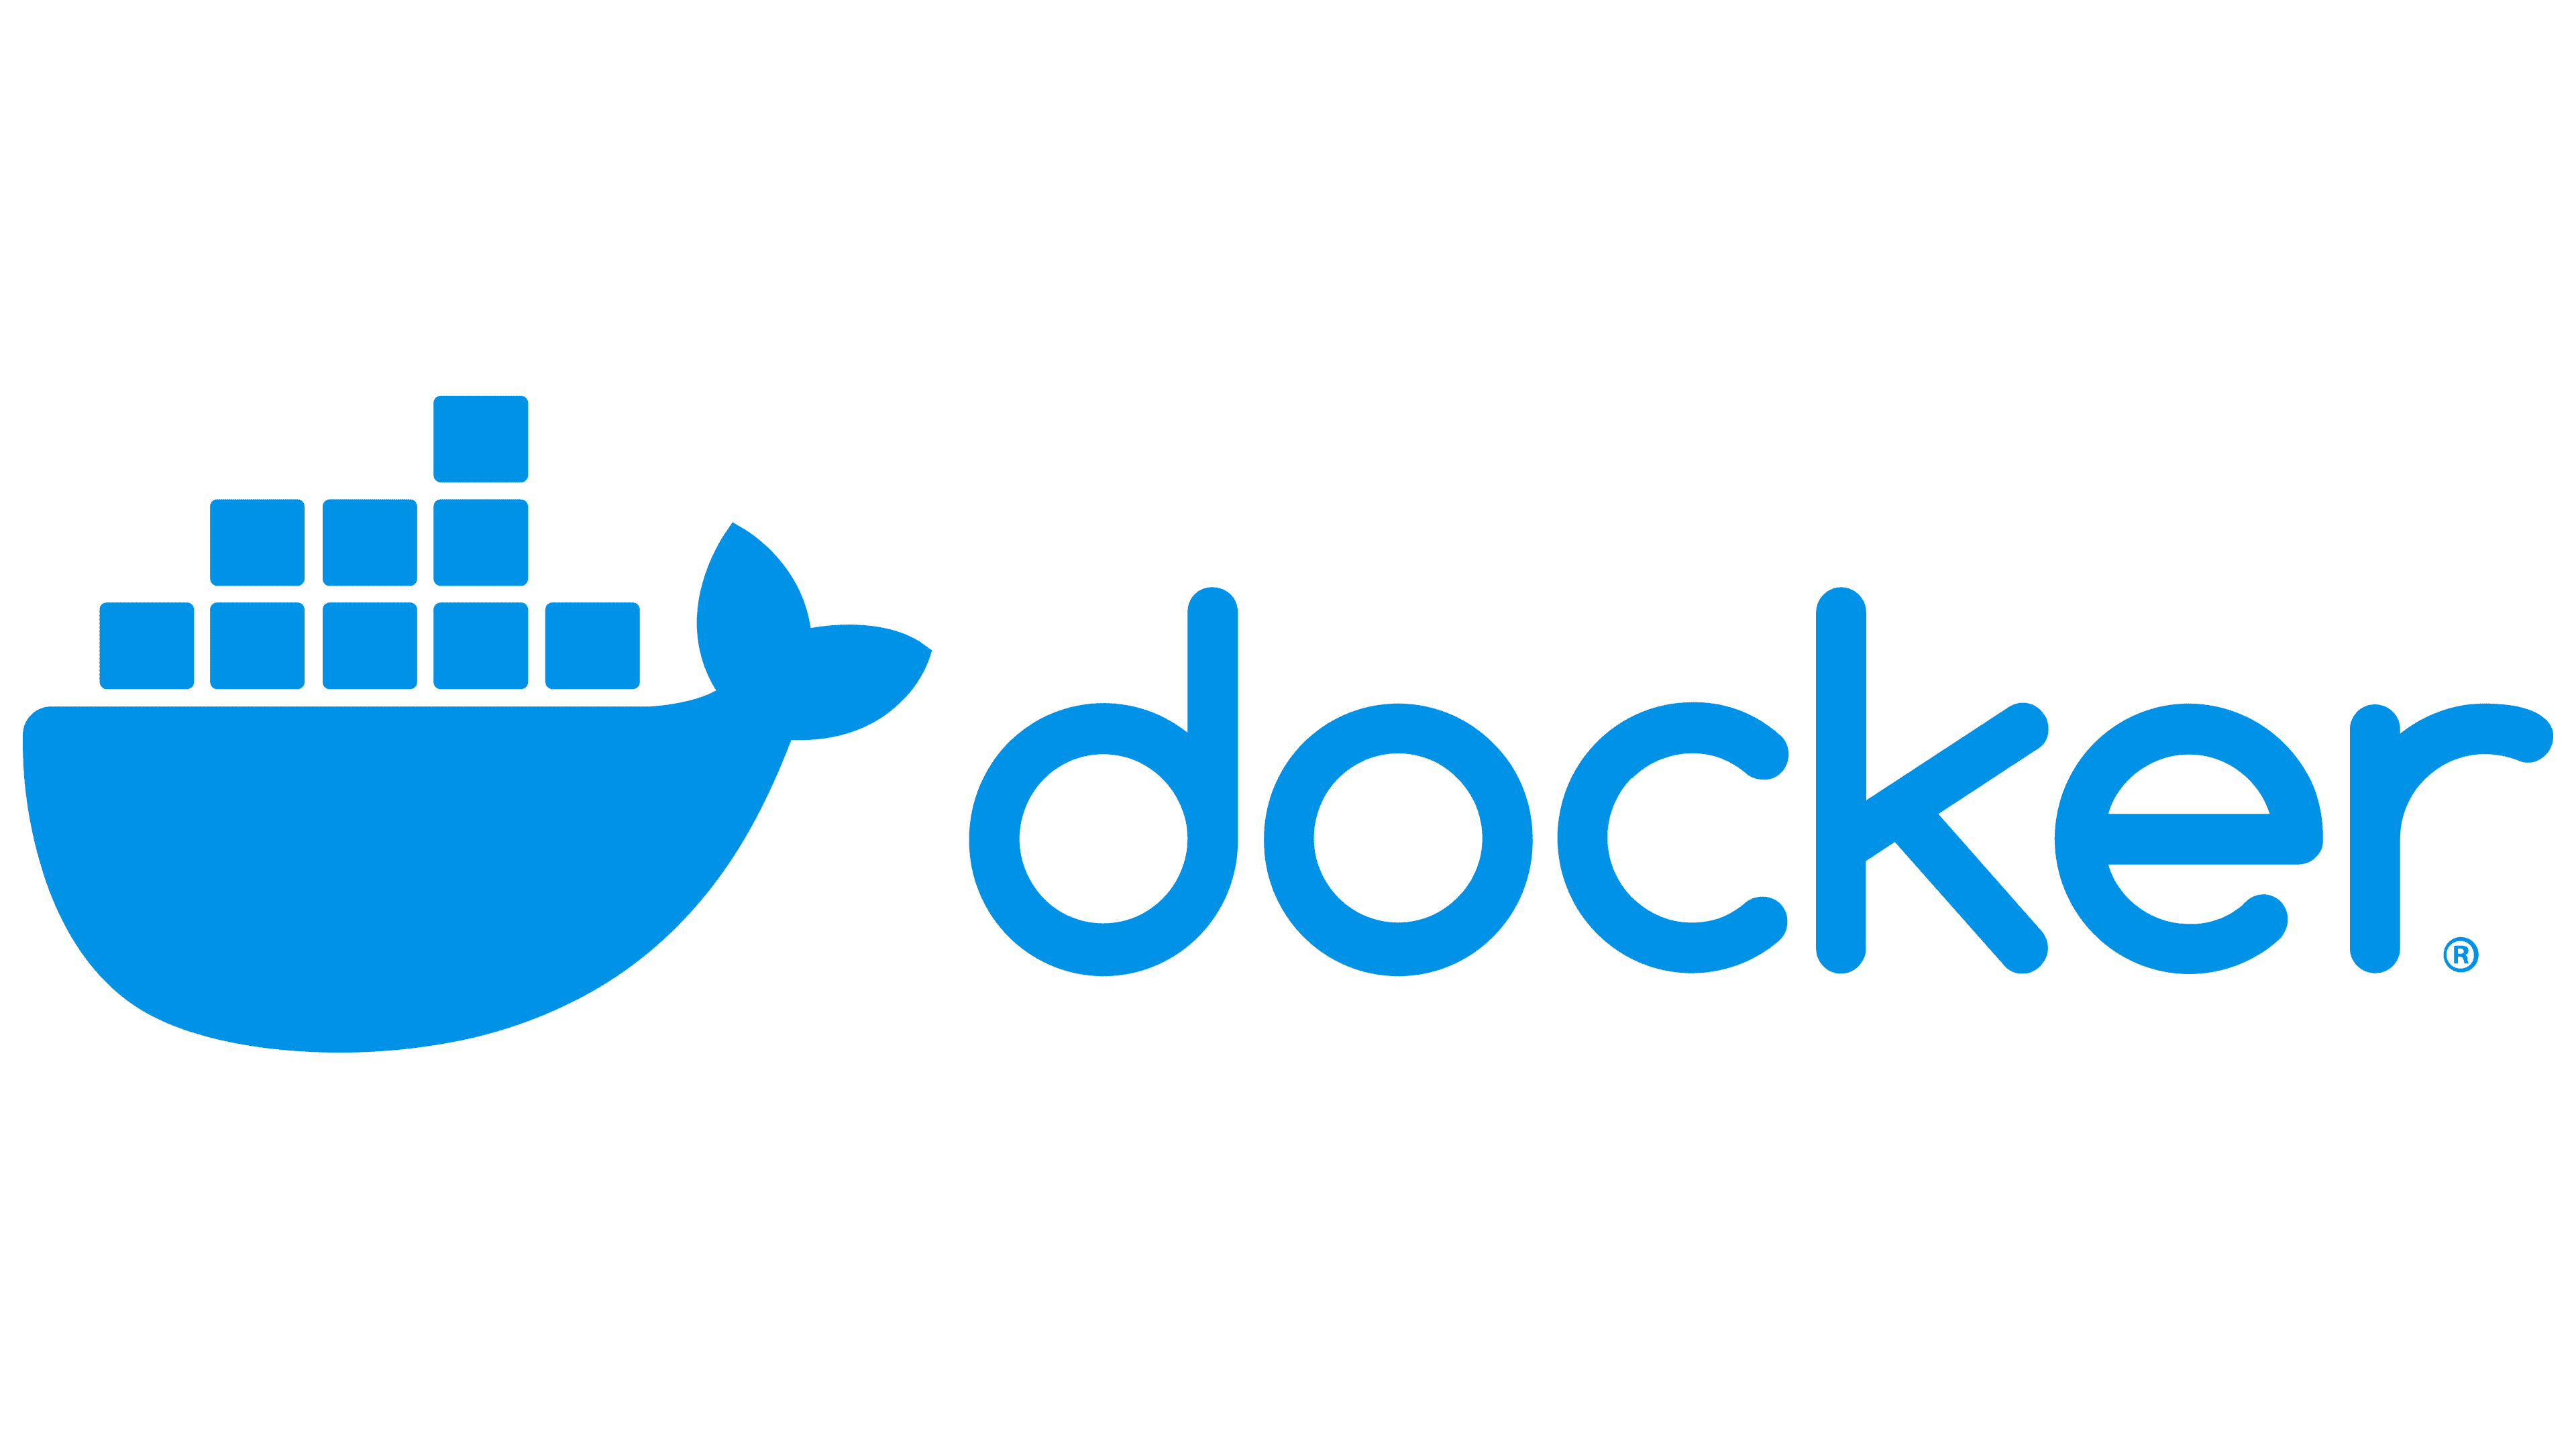 Docker: Revolutionizing Software Development and Distribution